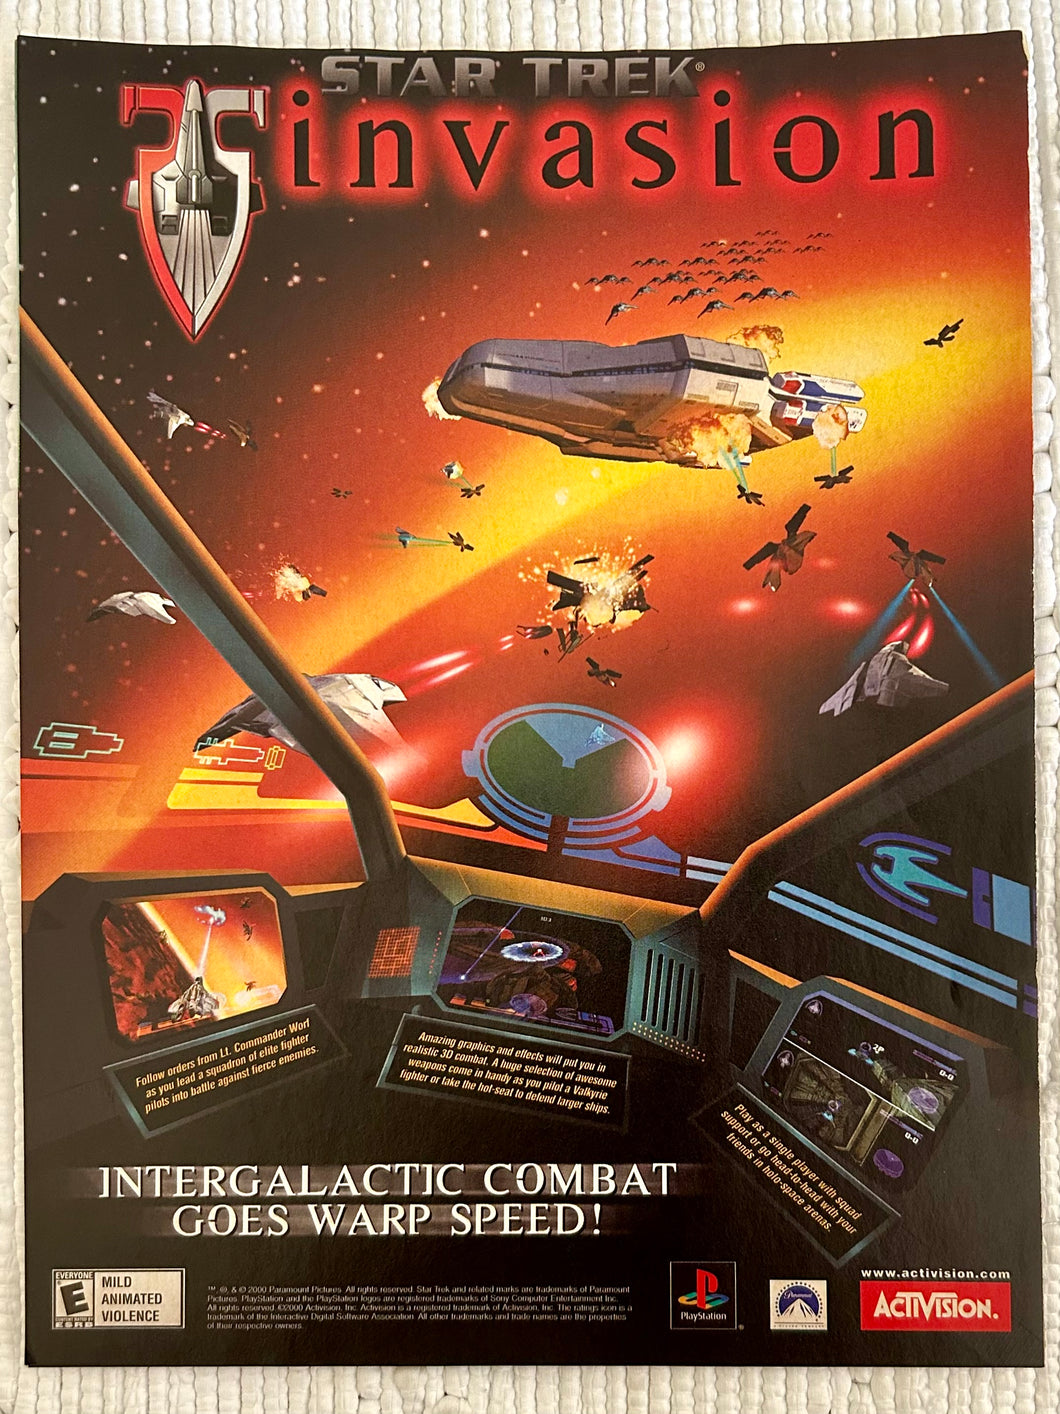 Star Trek: Invasion - PlayStation - Original Vintage Advertisement - Print Ads - Laminated A4 Poster